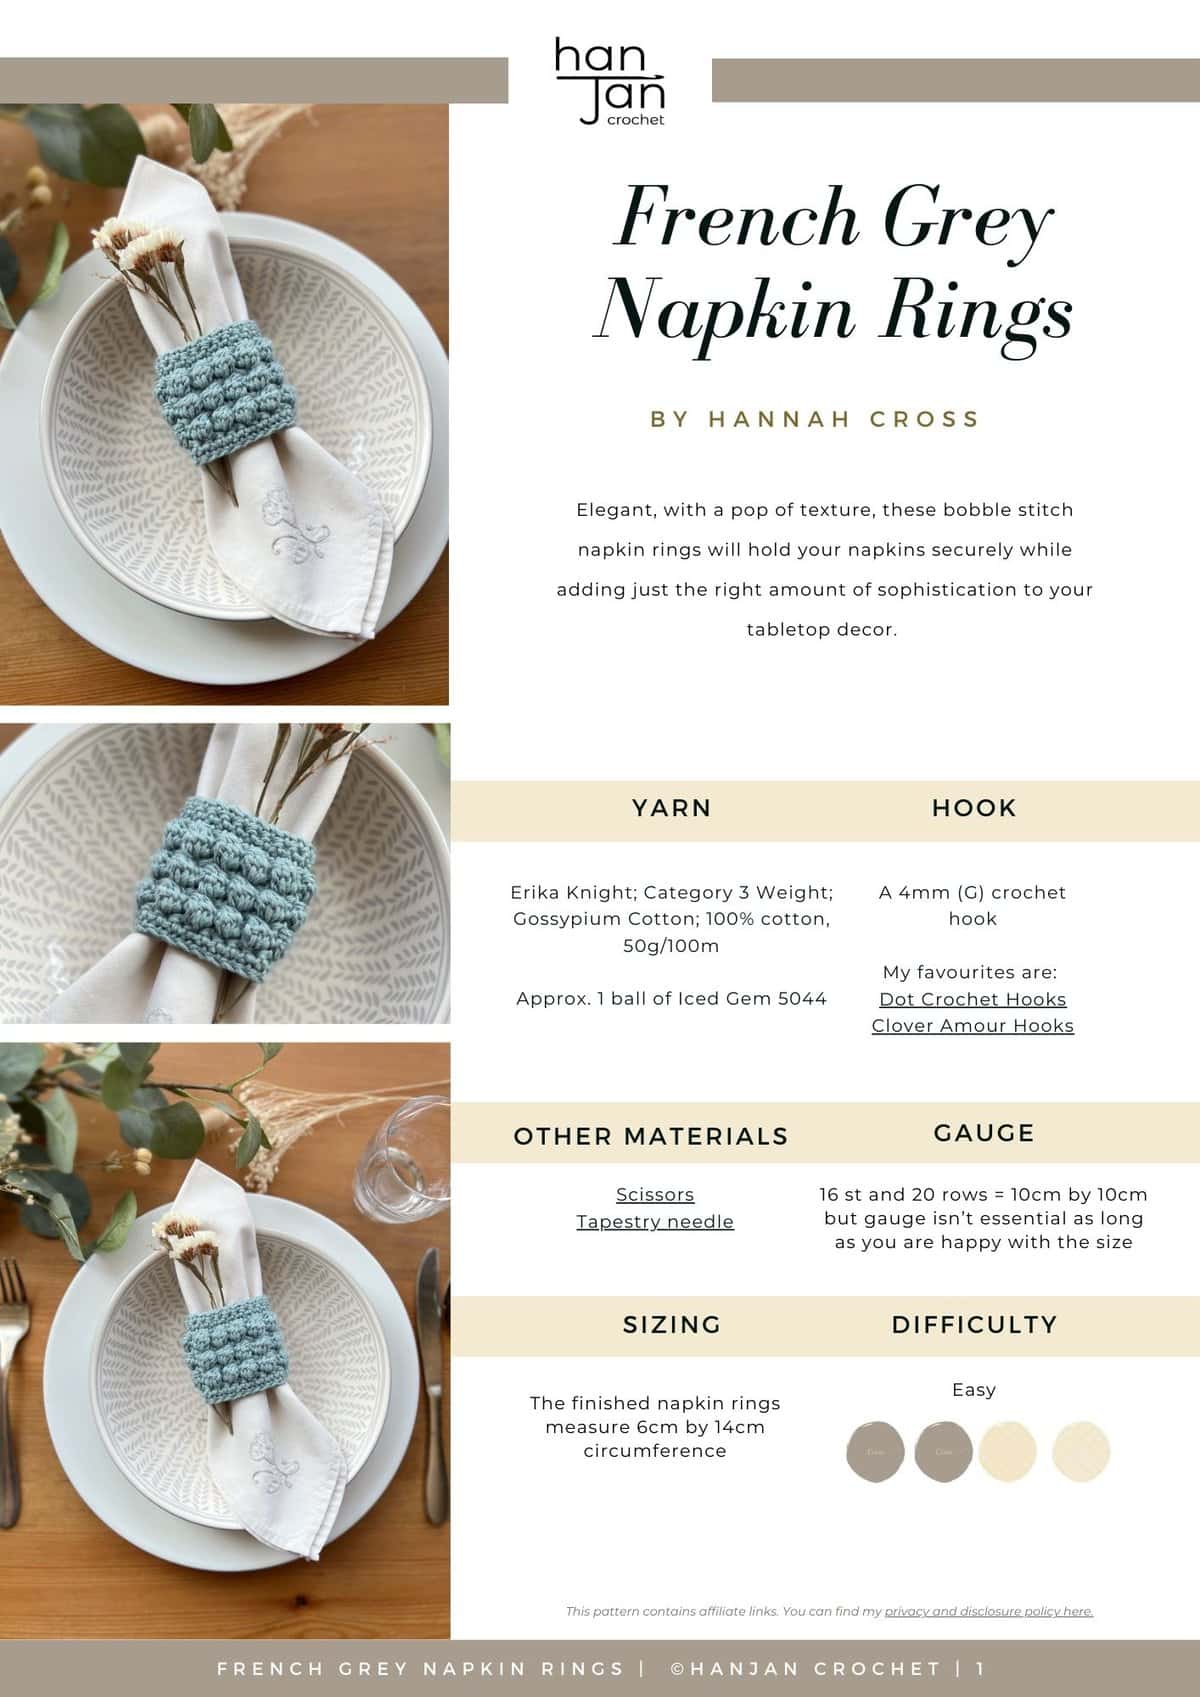 Crochet Napkin Ring Pattern - Modern and Easy